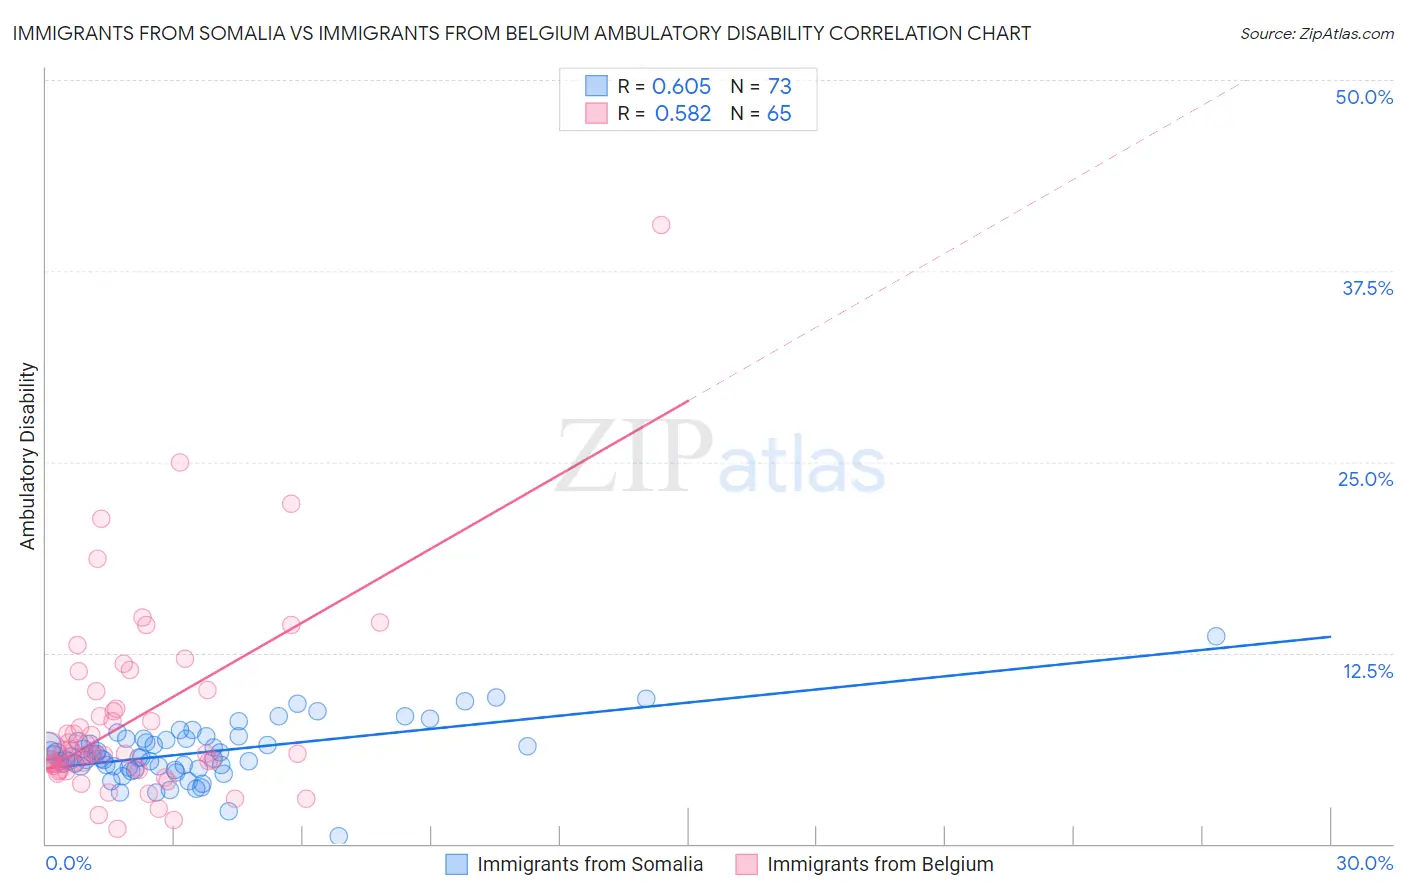 Immigrants from Somalia vs Immigrants from Belgium Ambulatory Disability